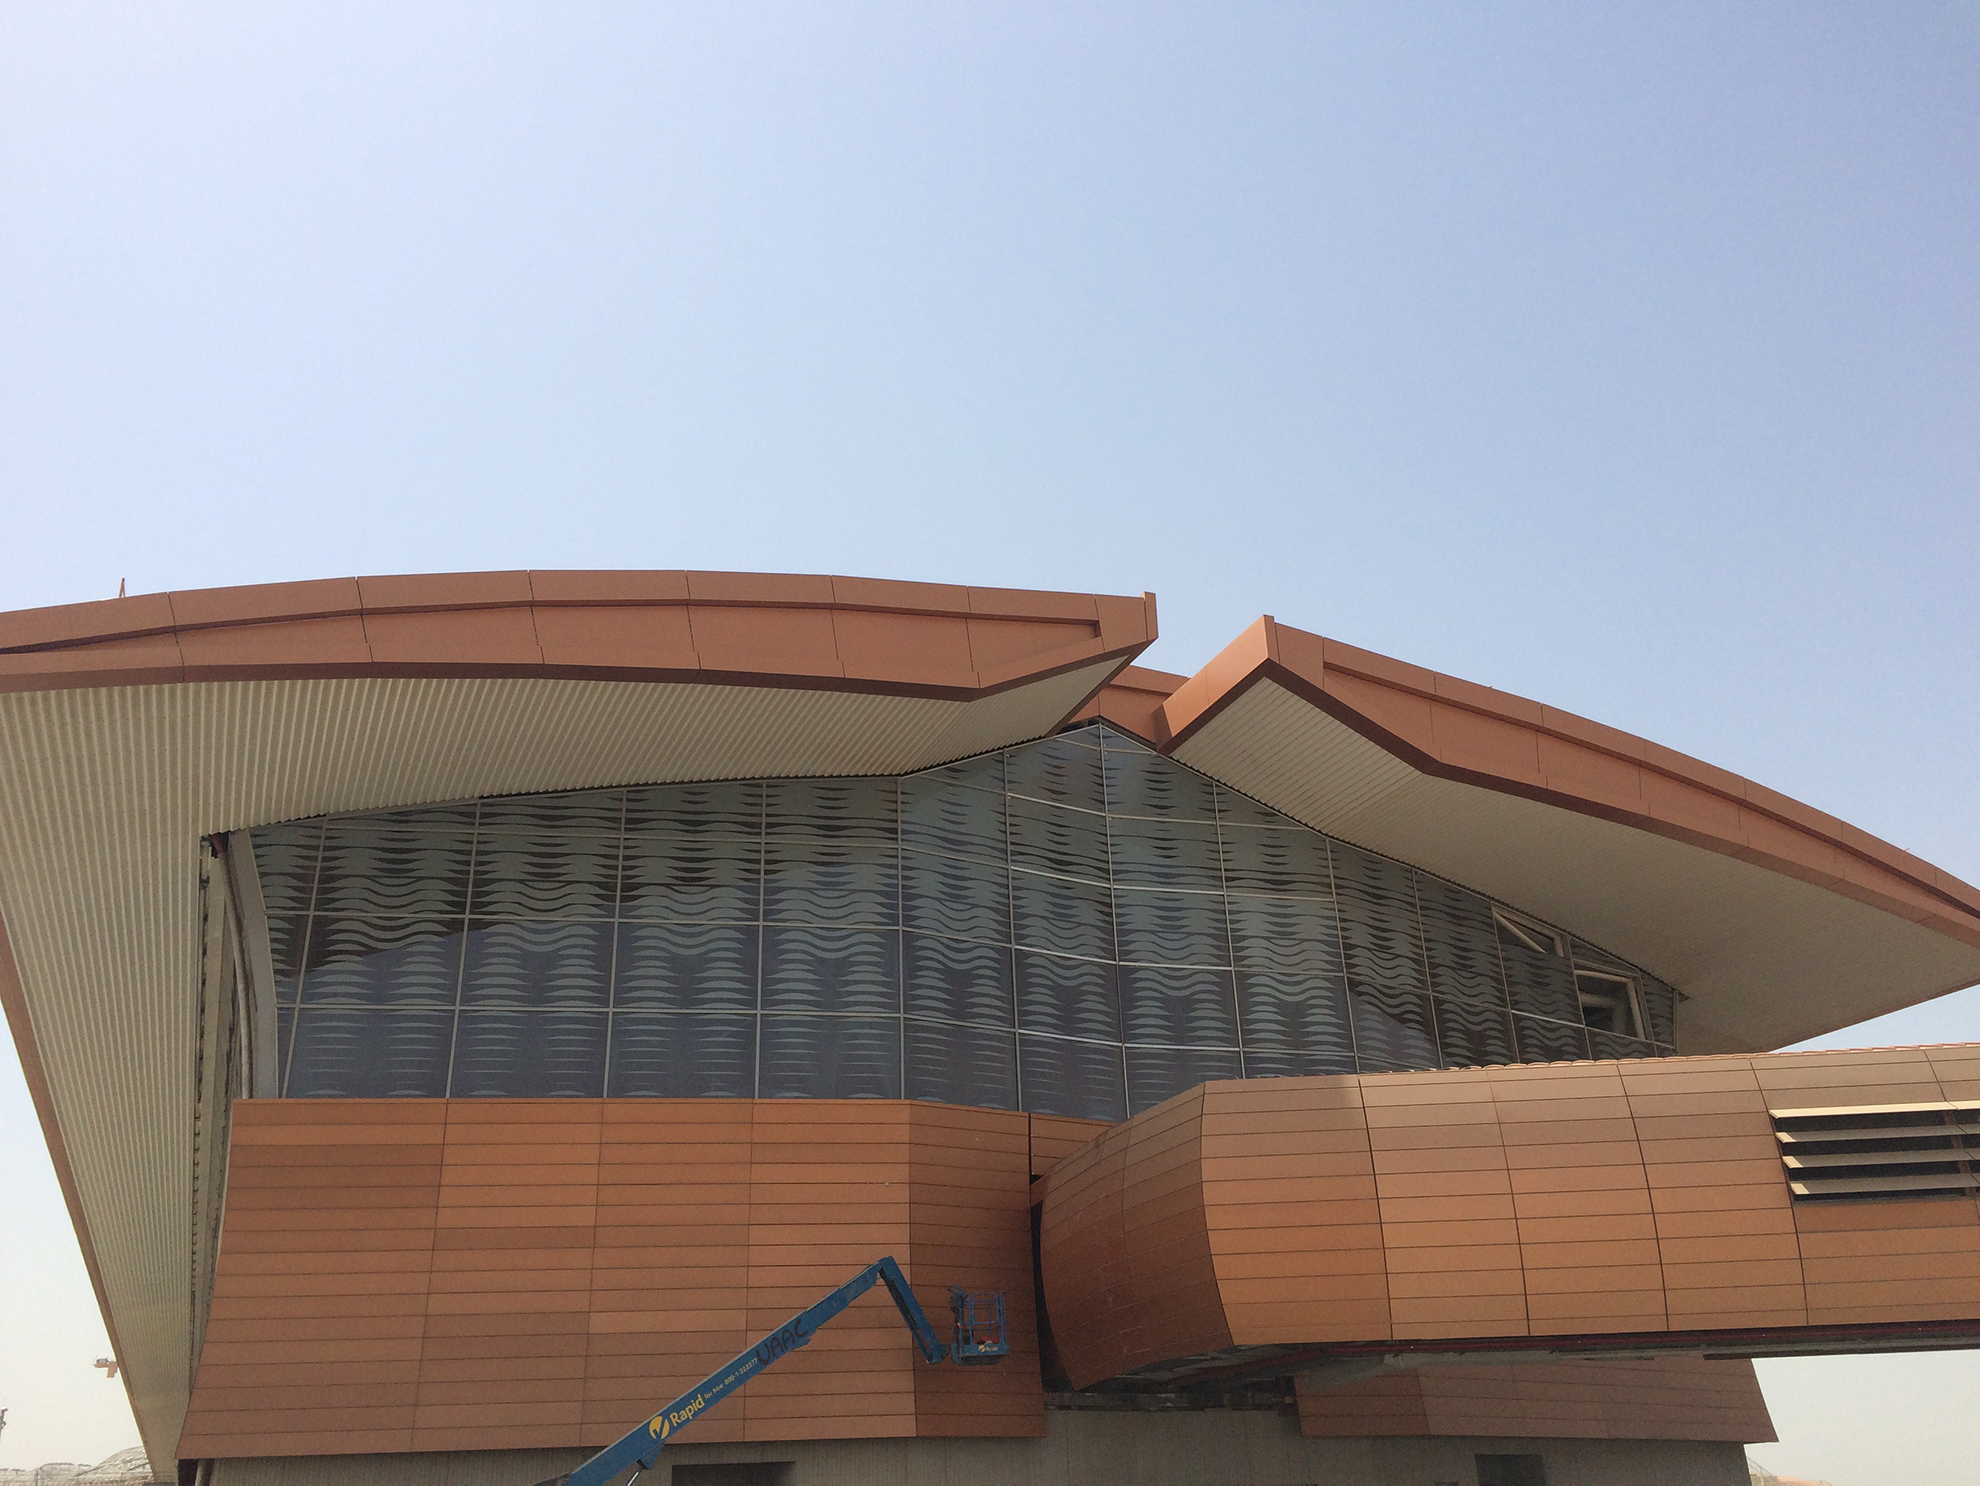 Aeropuerto-KAIA.-Jeddah-Arabia-Saudi.-larson-12_1585819962.jpg